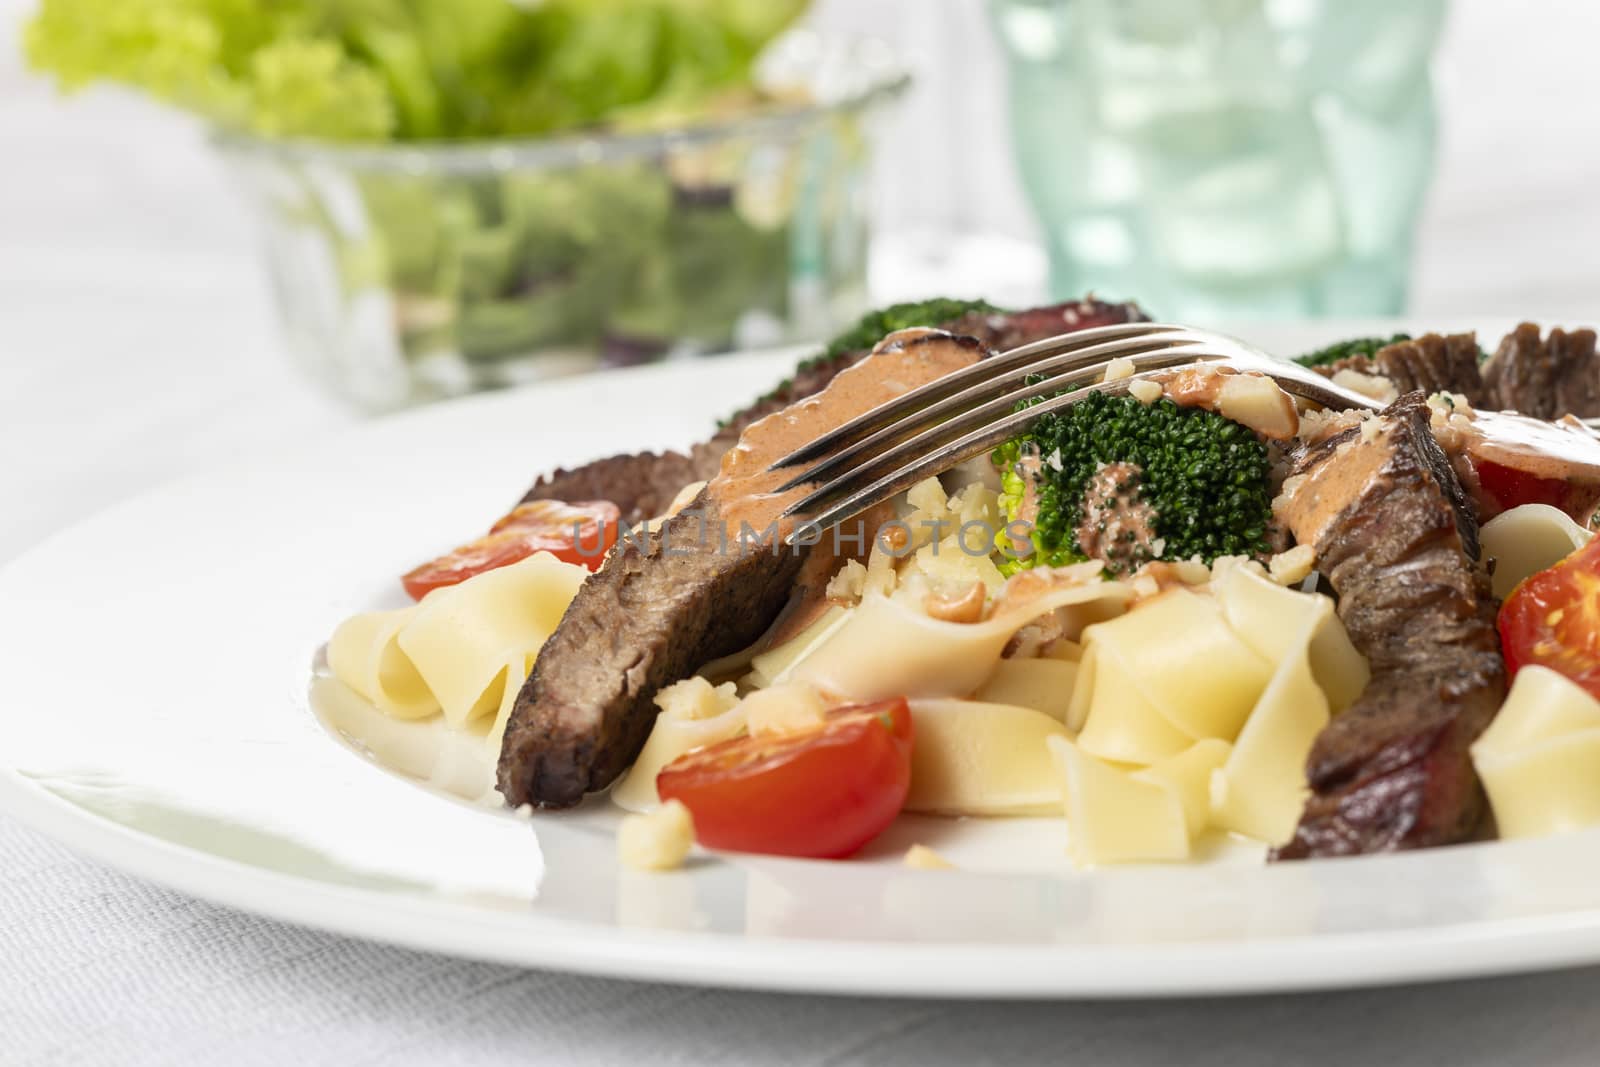 tagliatelli with steak slices on a plate